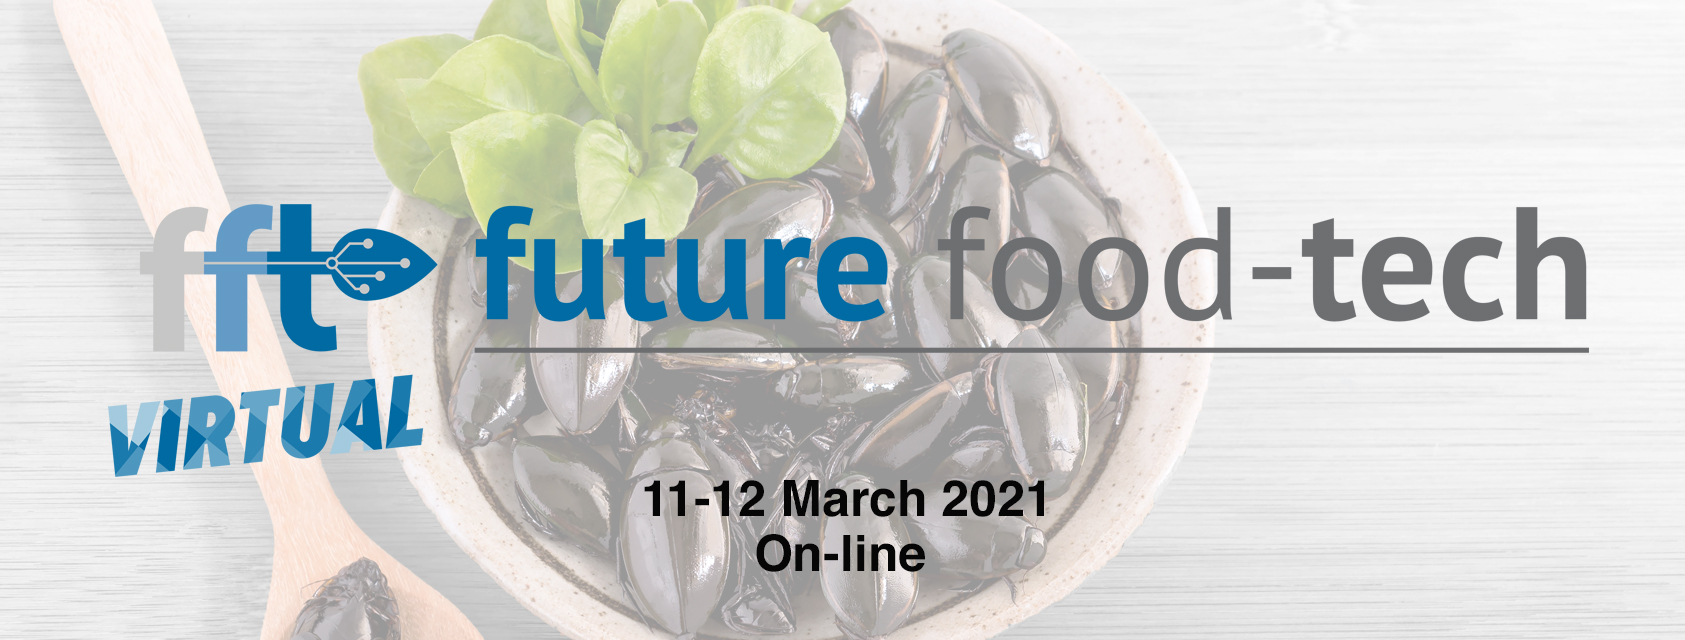 Future_food